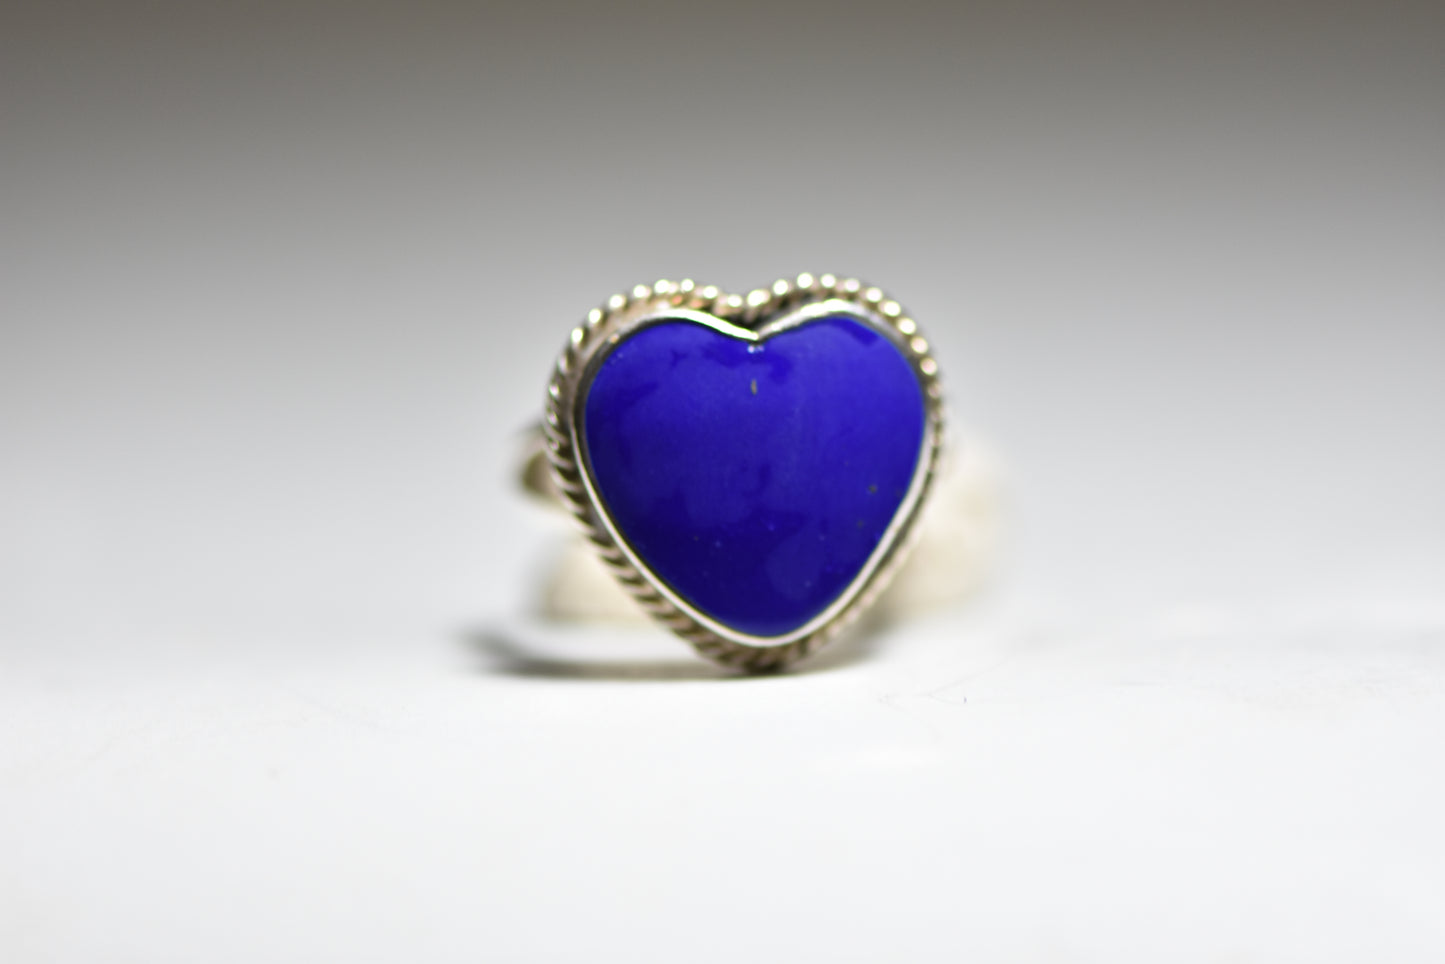 Heart ring blue lapis lazuli southwest love valentine sterling silver women girls